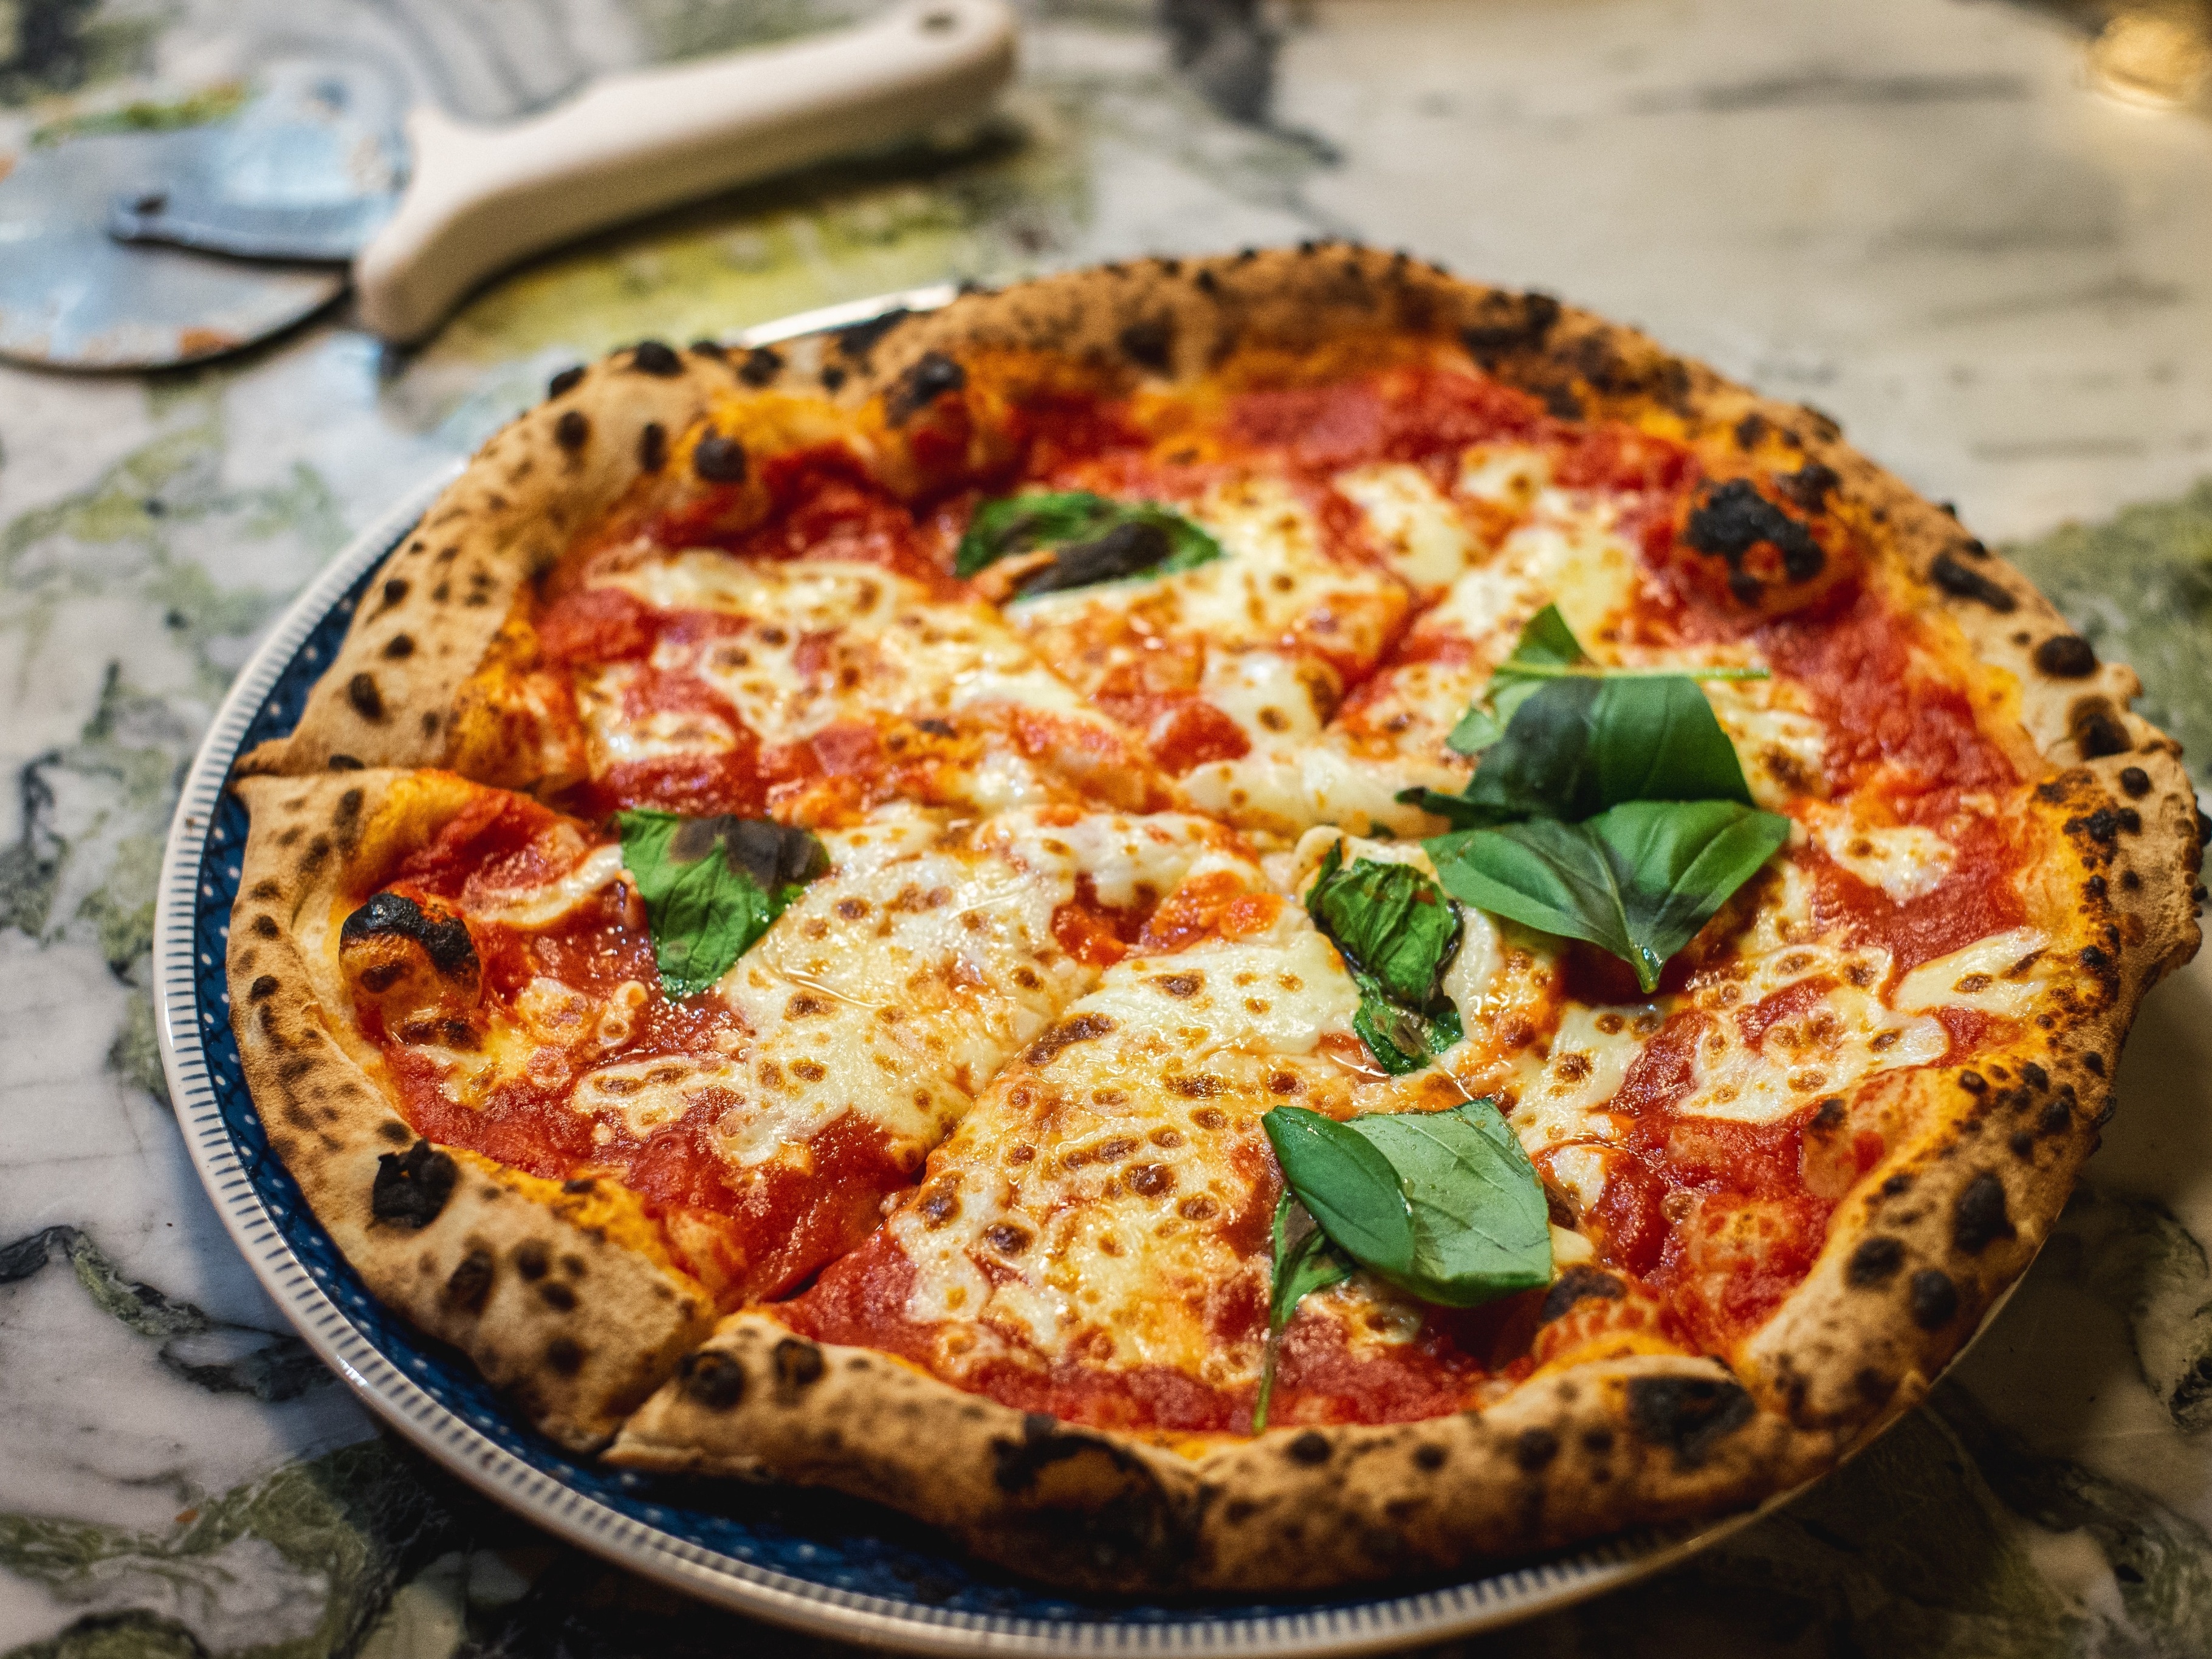 Nápoles e suas deliciosas pizzas - Projeto 101 Países